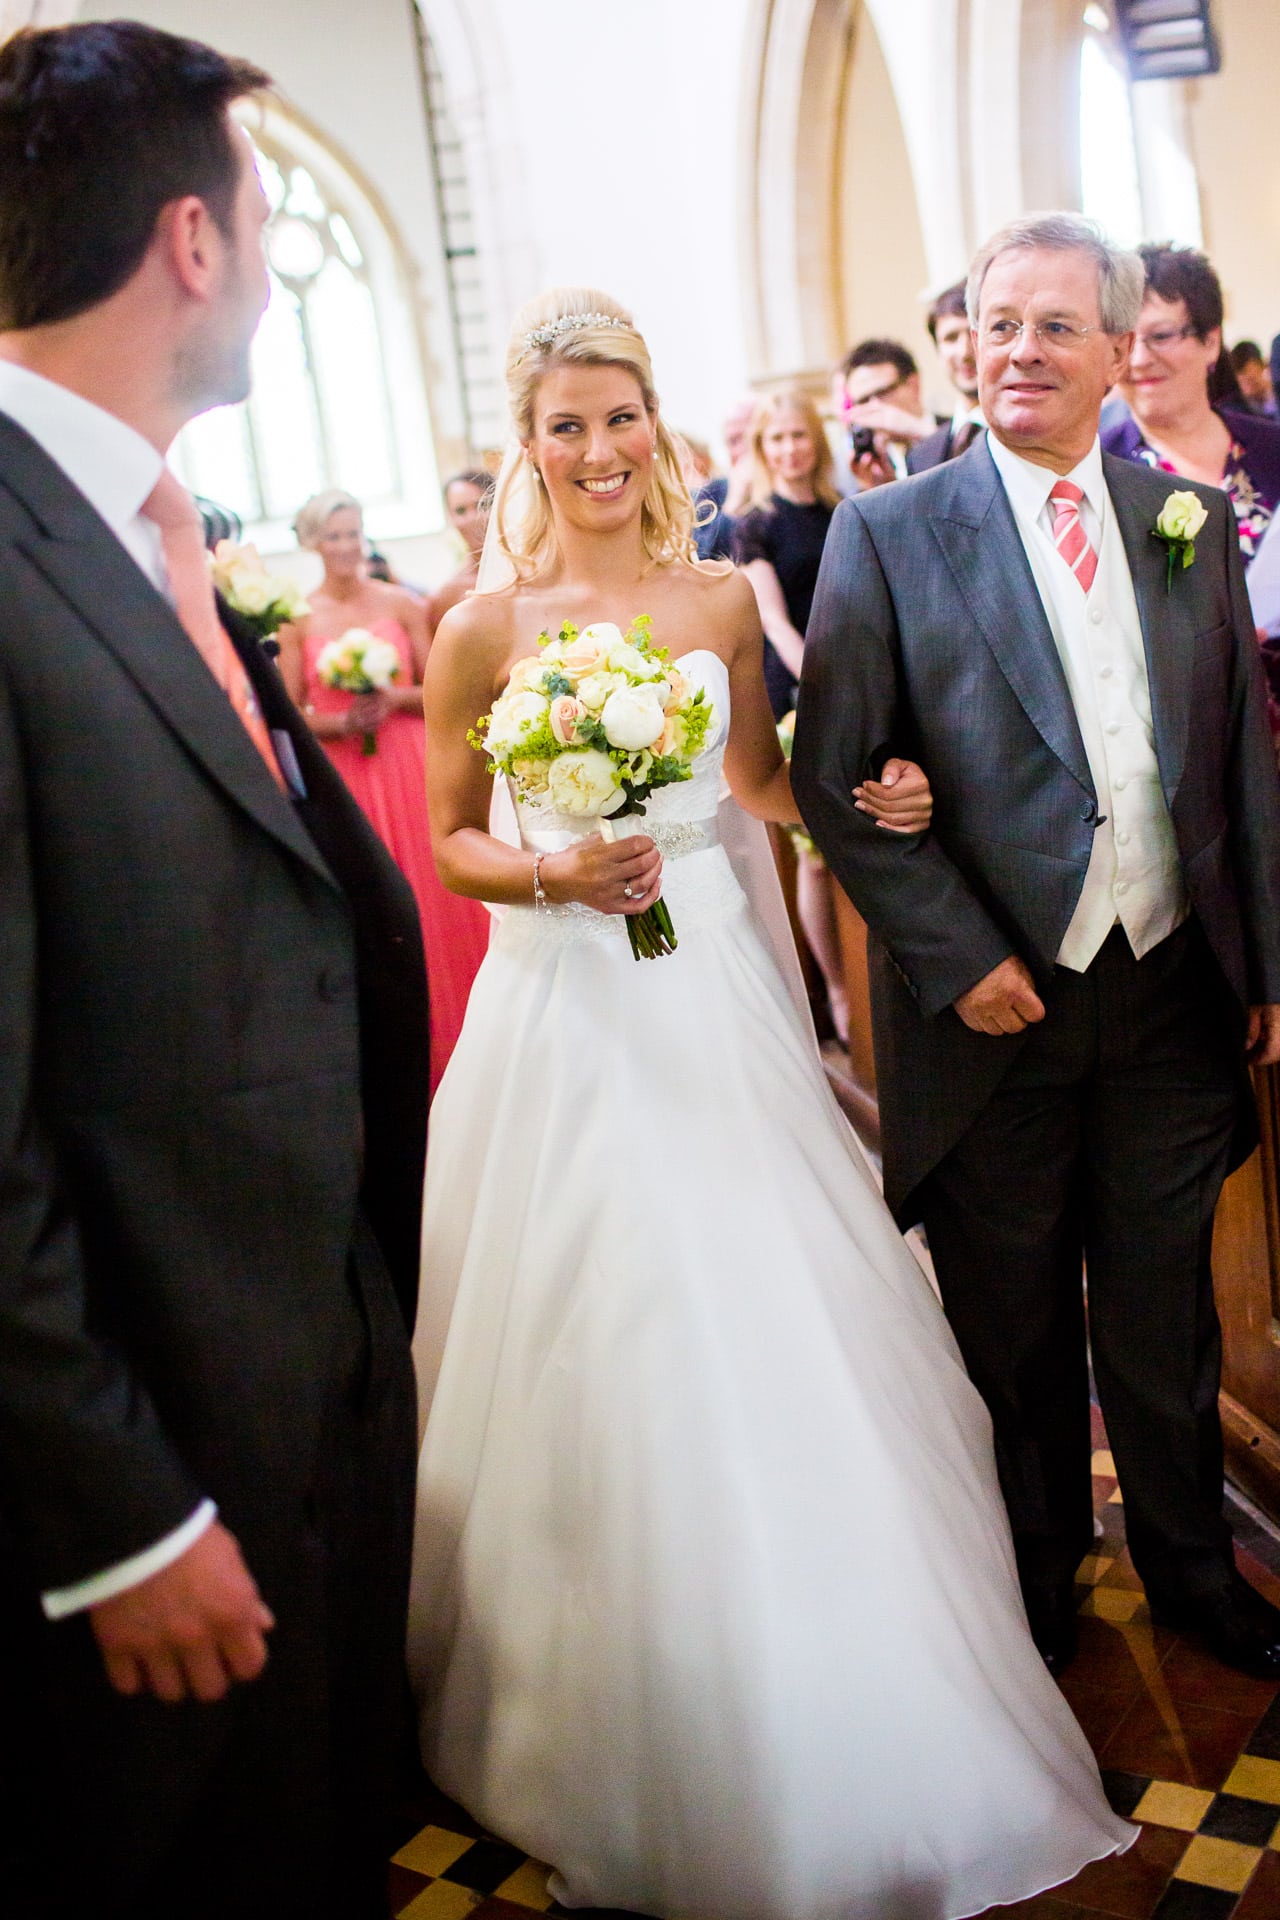 bridal entering church with dad